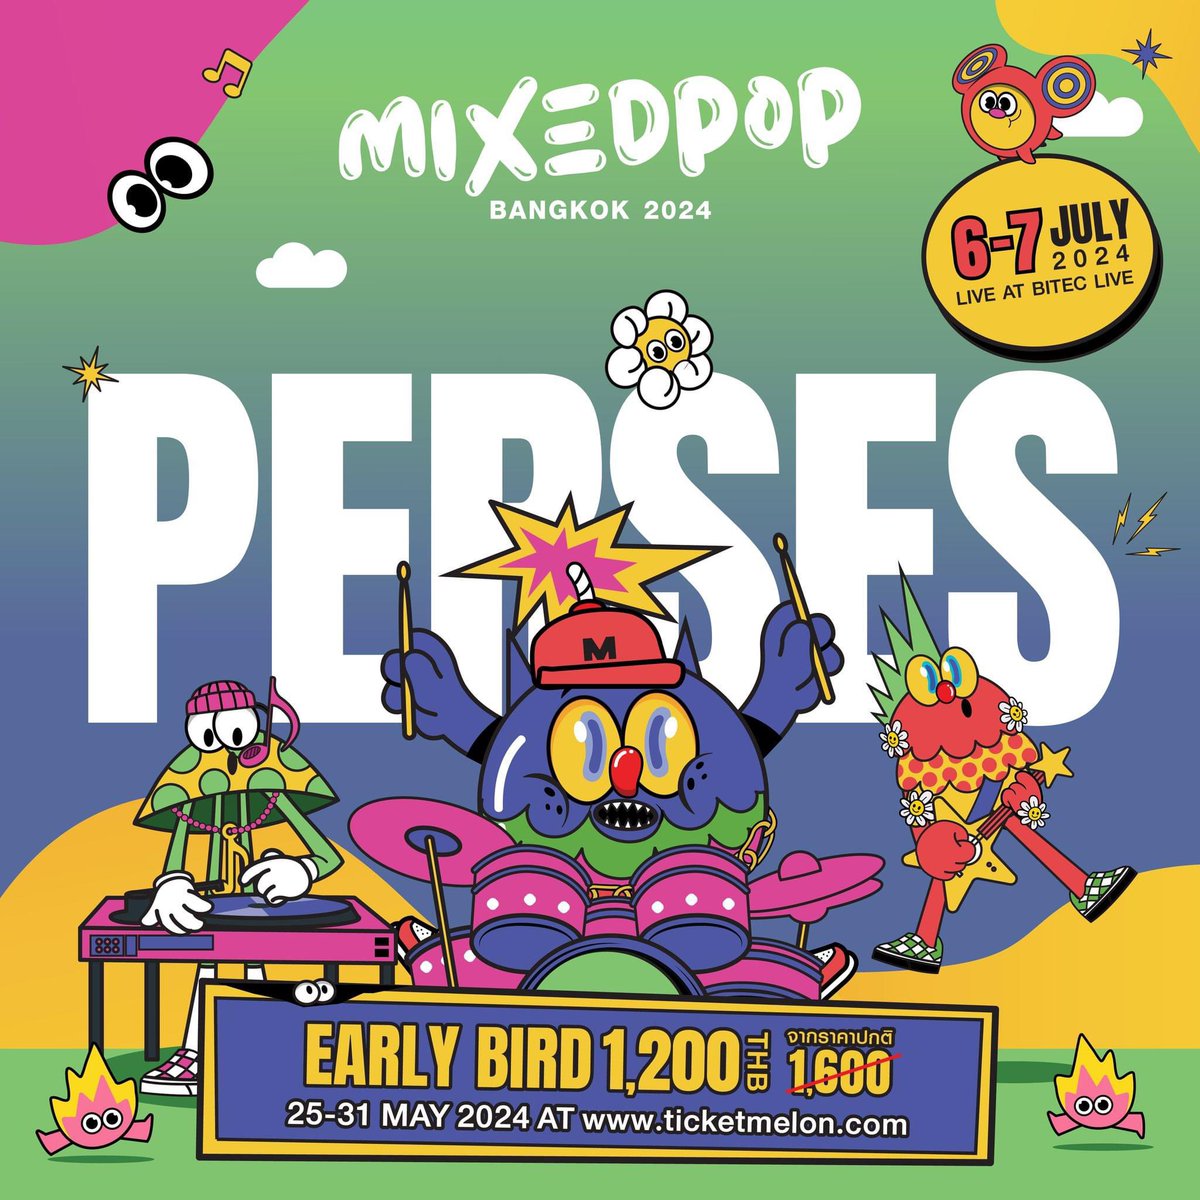 🌈#MIXEDPOPFESTxPERSES 🏀 เข้ามาคุย เข้ามาทัก Say what’s up girl!! PERSES พร้อมมาโชว์ Performance สุดเท่ให้ได้ชมกันแล้วที่ 𝐌𝐈𝐗𝐄𝐃𝐏𝐎𝐏 𝐁𝐀𝐍𝐆𝐊𝐎𝐊 𝟐𝟎𝟐𝟒🔥 . เพราะข้อห้ามข้อเดียวของเฟสนี้คือ “ห้ามพลาด” 📍6-7 July 2024 AT BITEC LIVE . 🍭จำหน่ายบัตร Early Bird 25 - 31